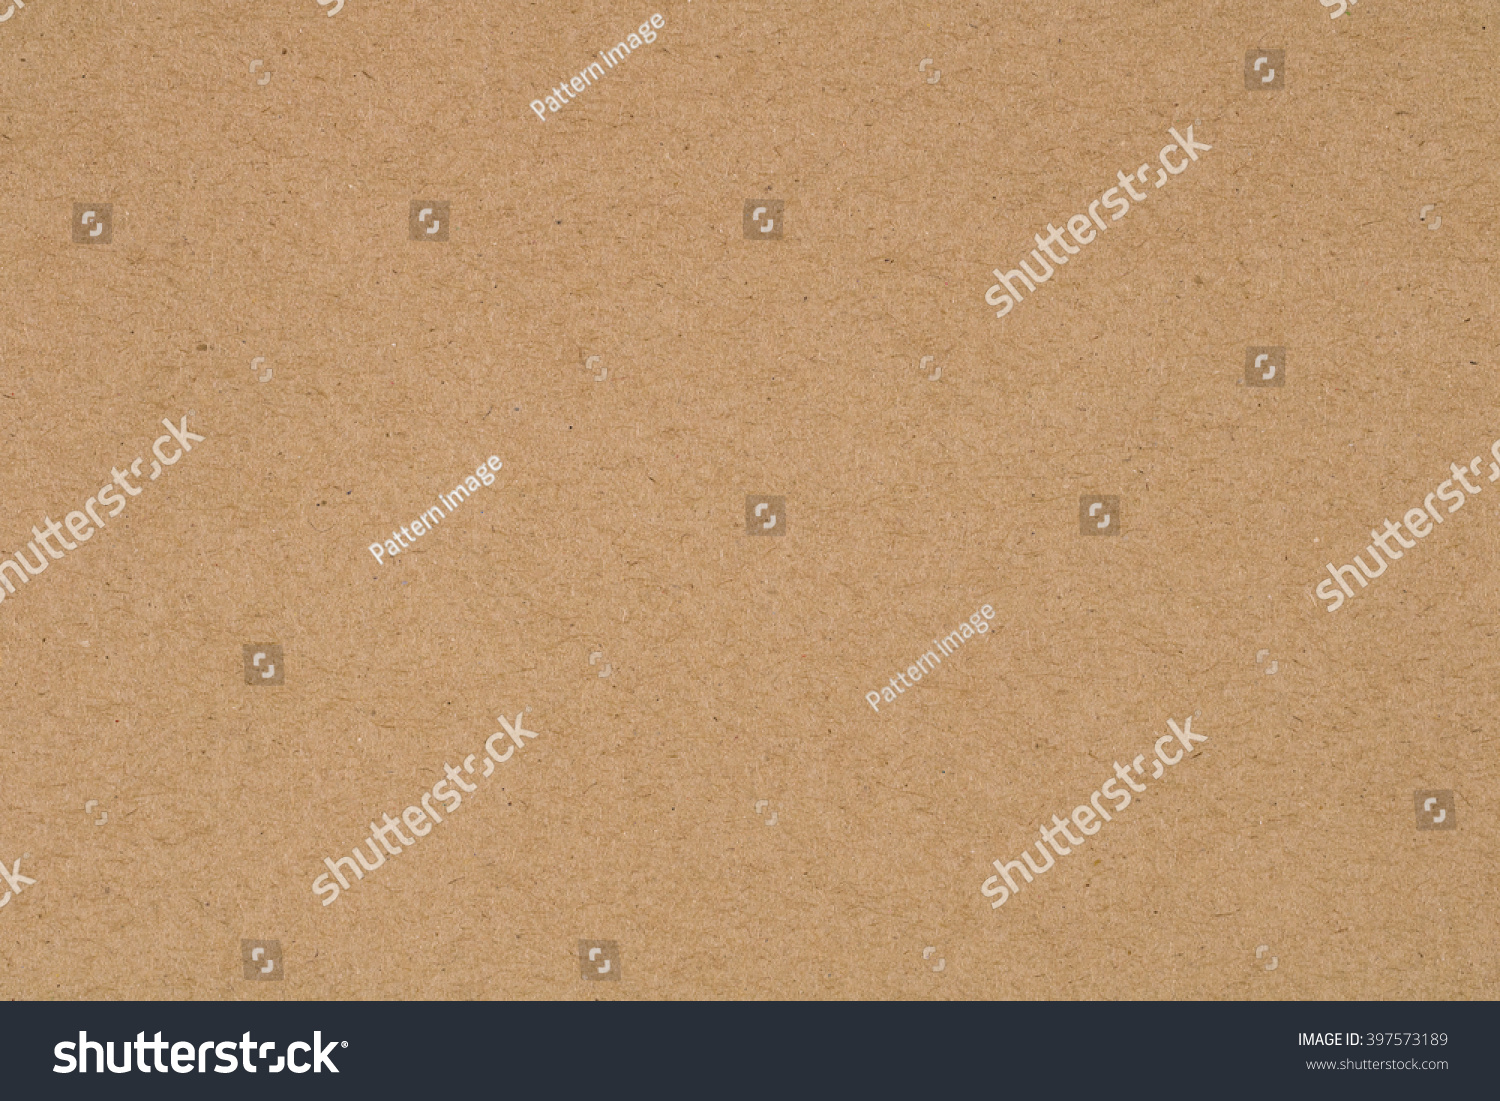 Paper texture cardboard background #397573189